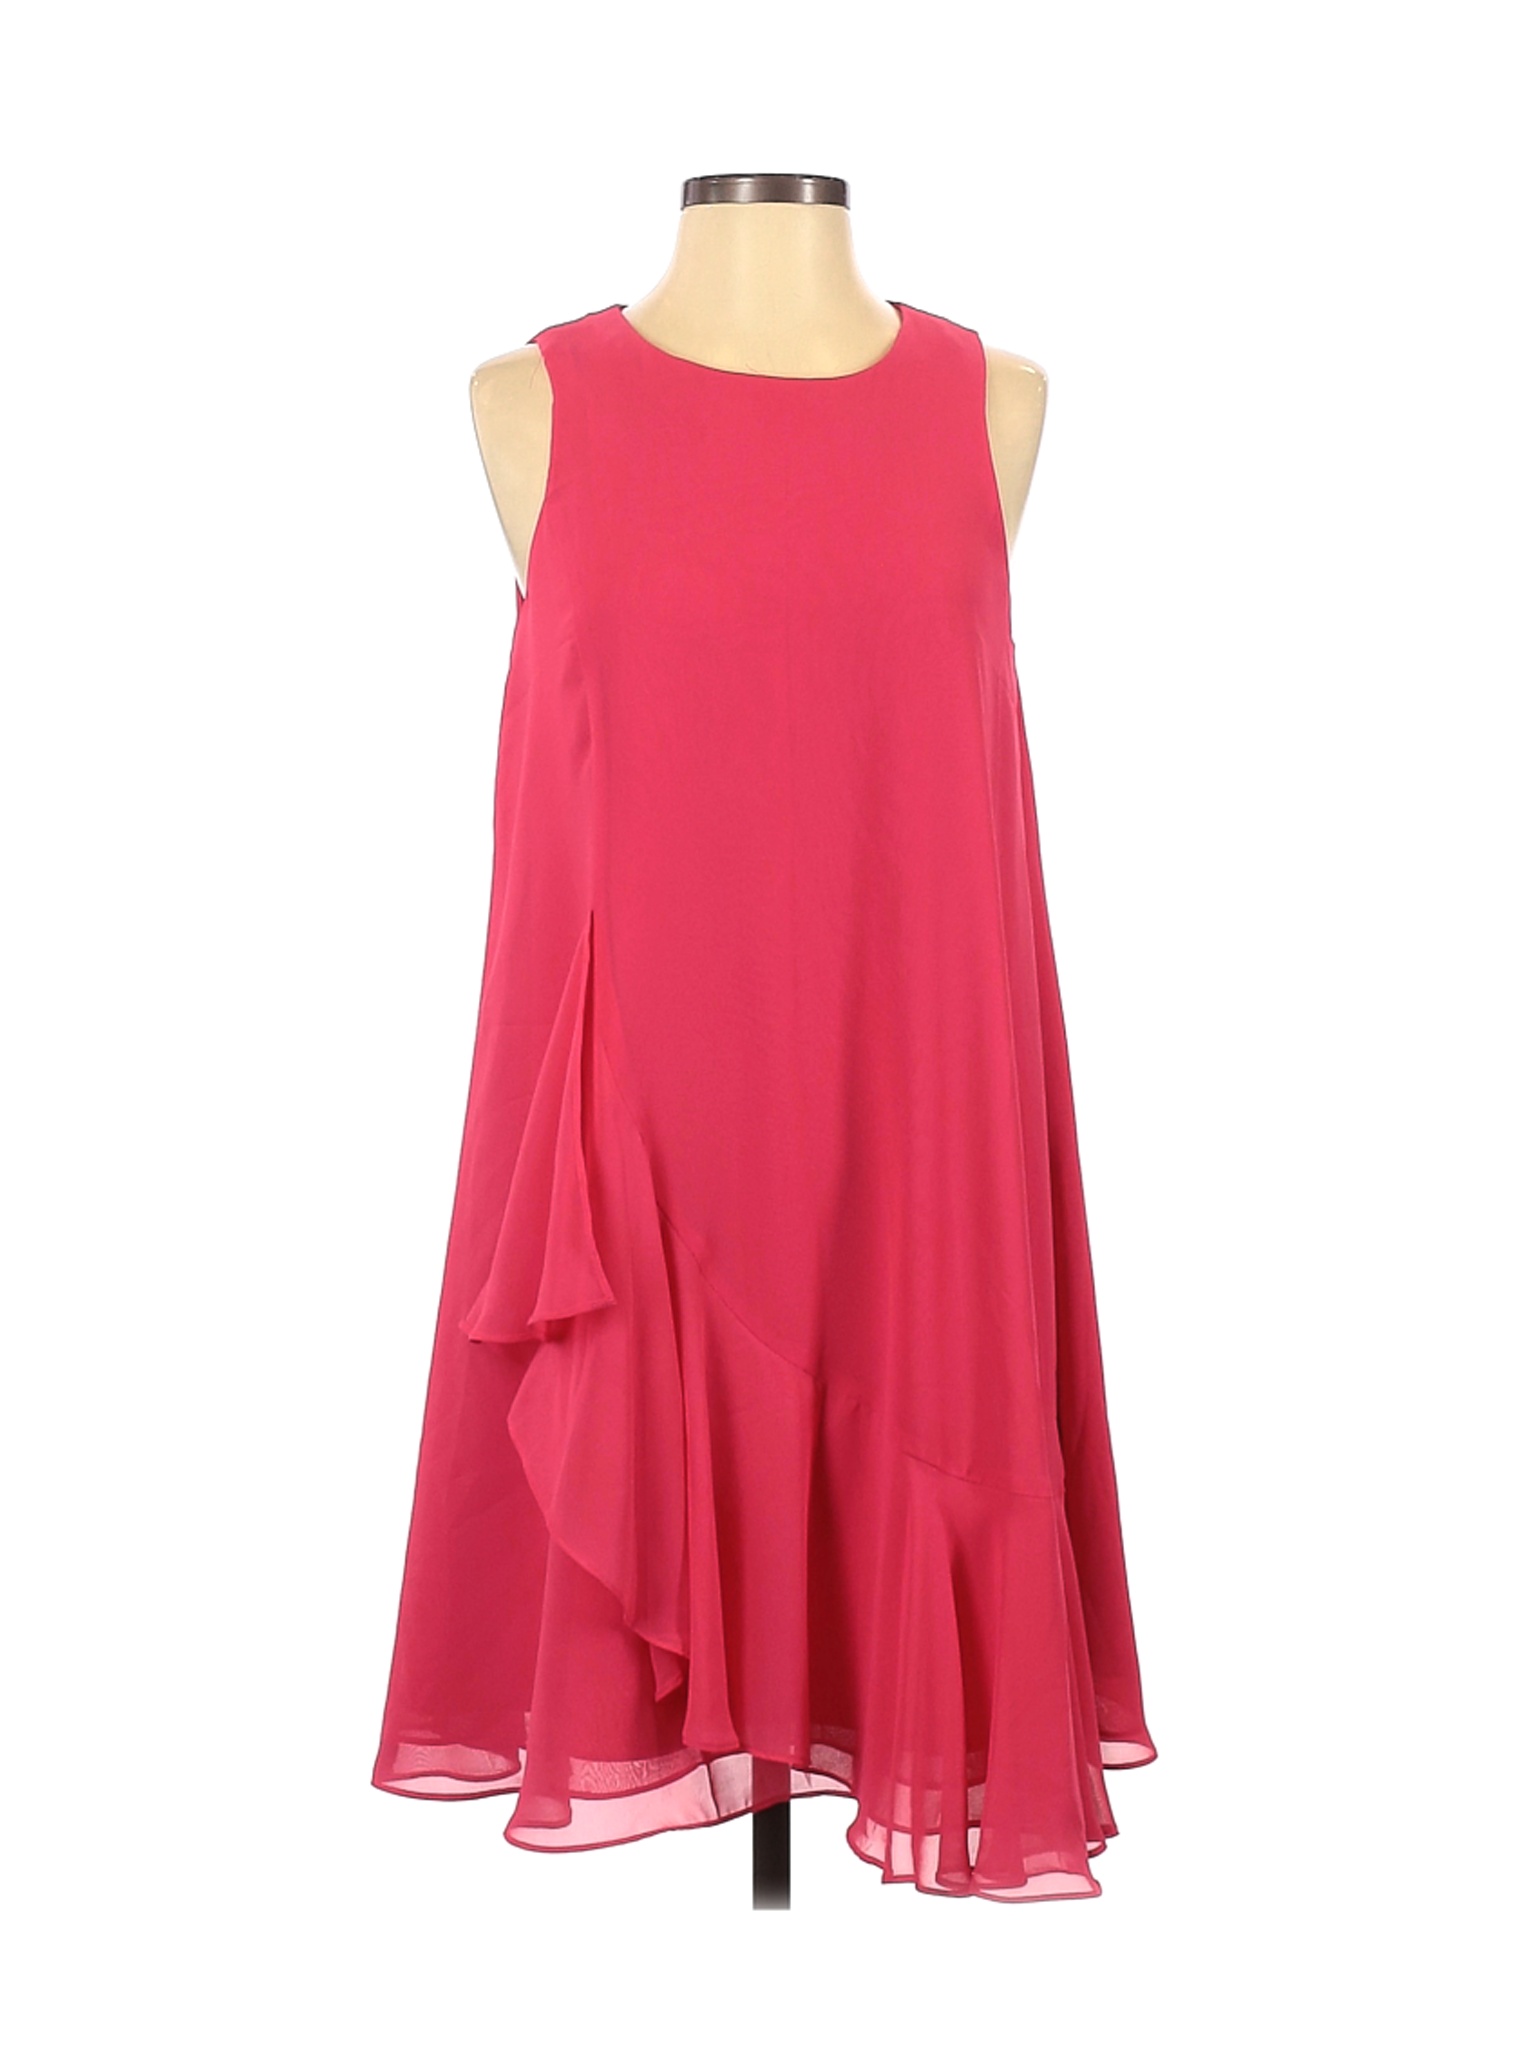 Eliza J Women Red Cocktail Dress 6 | eBay